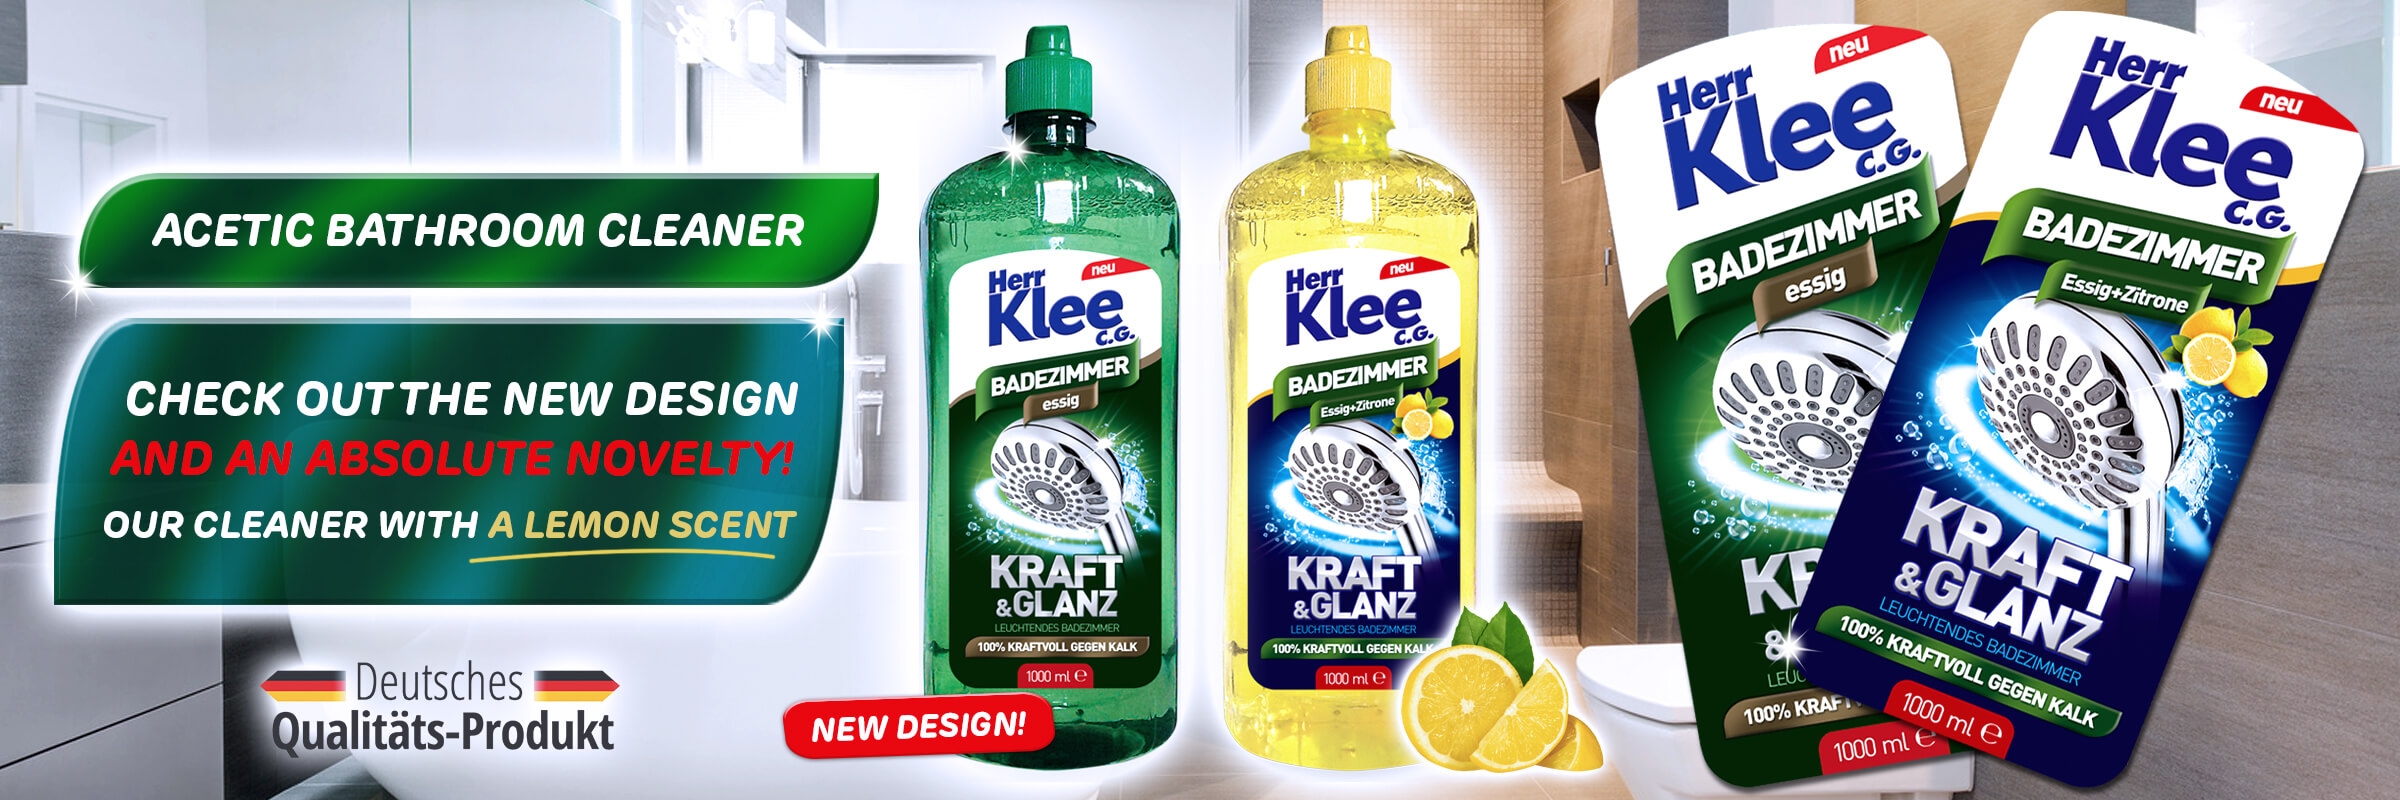 New! Herr Klee acetic liquid bathroom cleaner with a lemon scent!